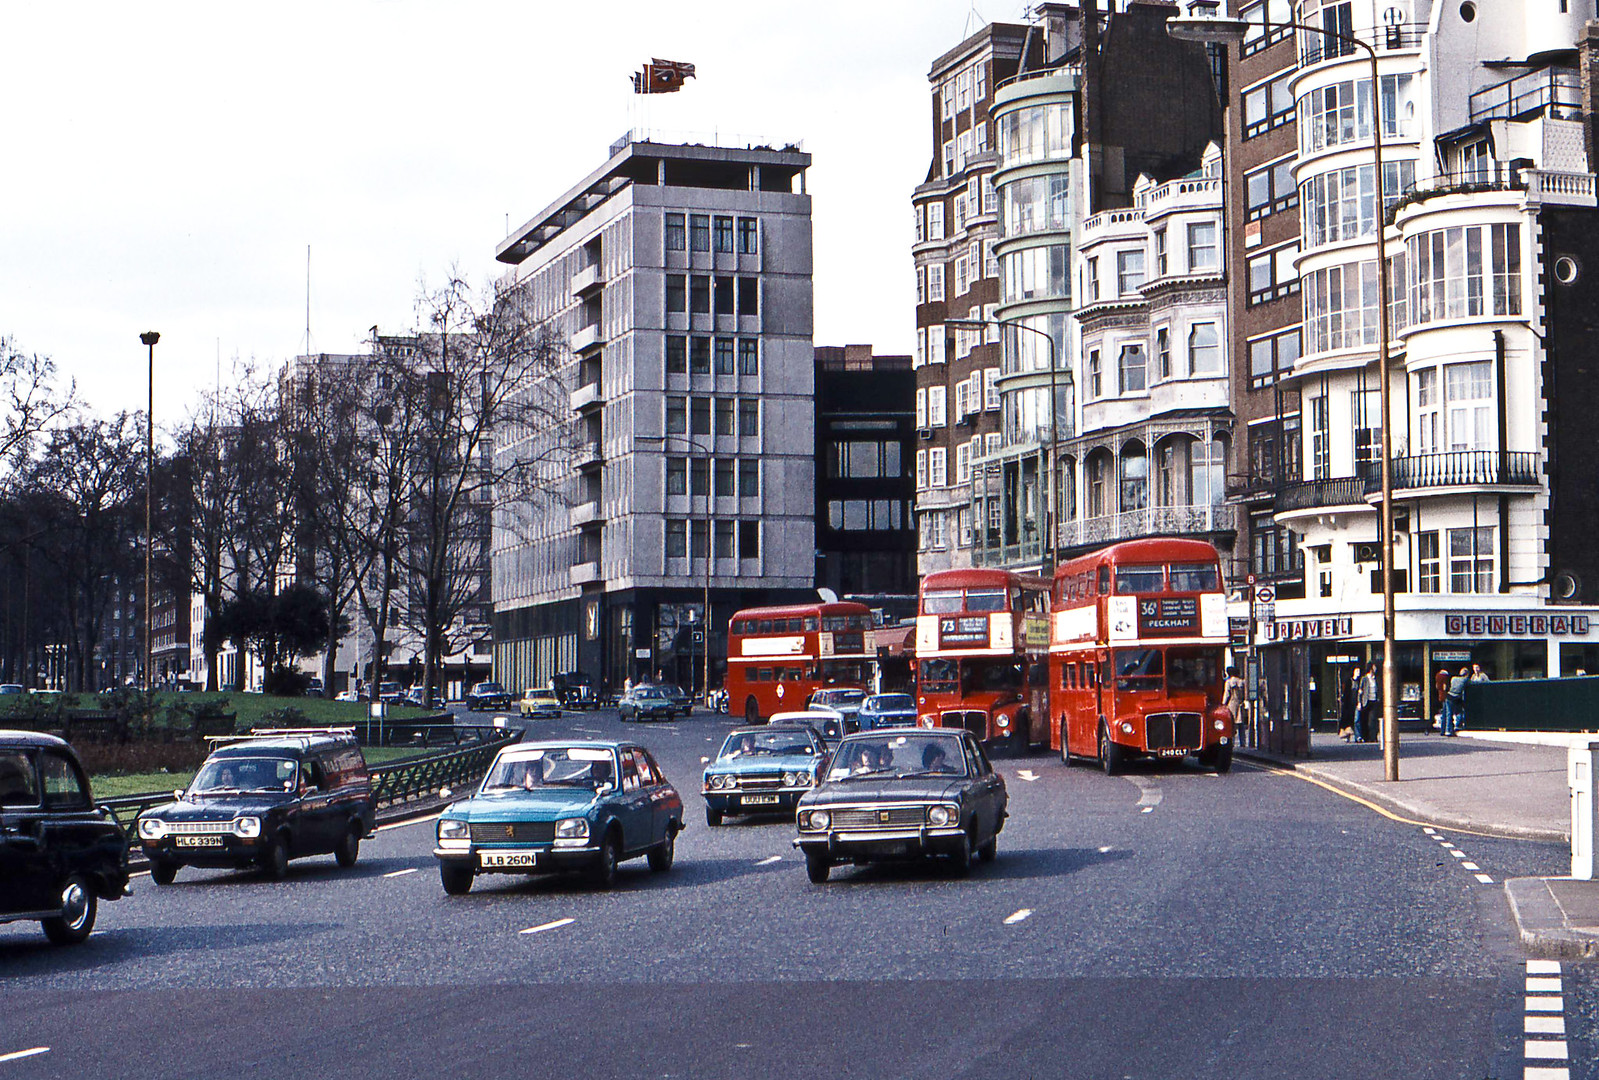 London cars 1970s